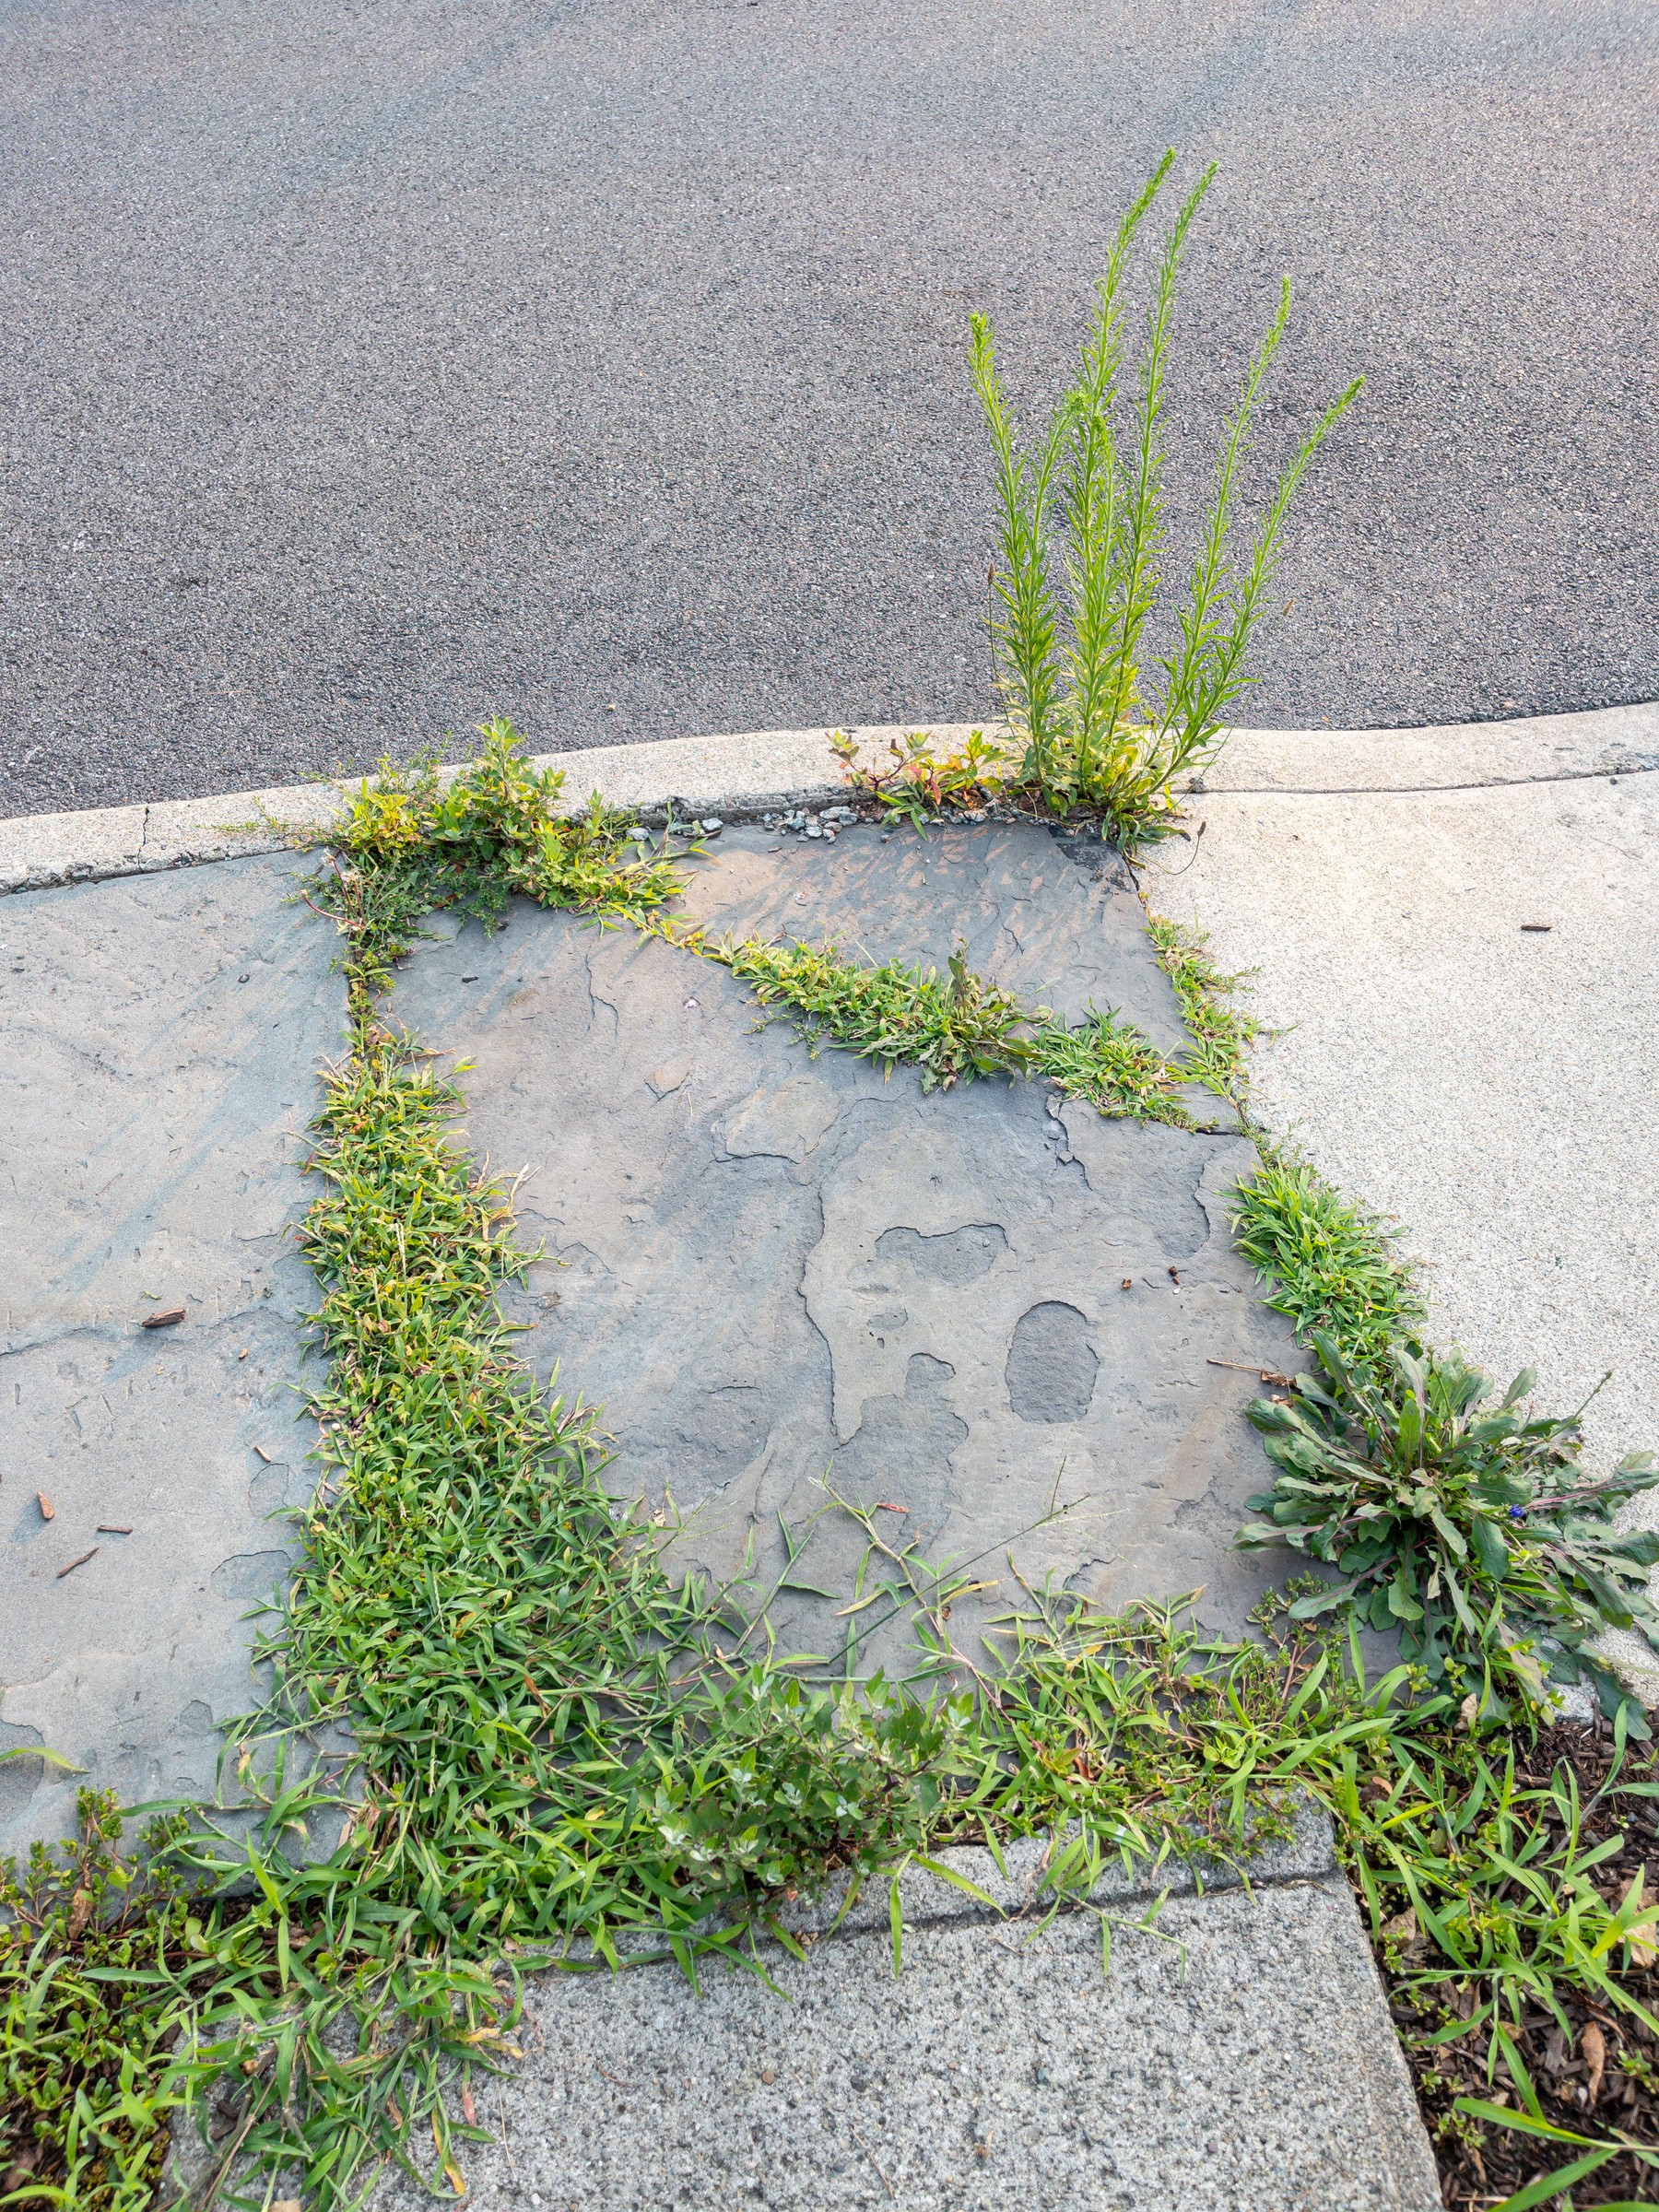 Weeds growing out of cracks in the sidewalk.